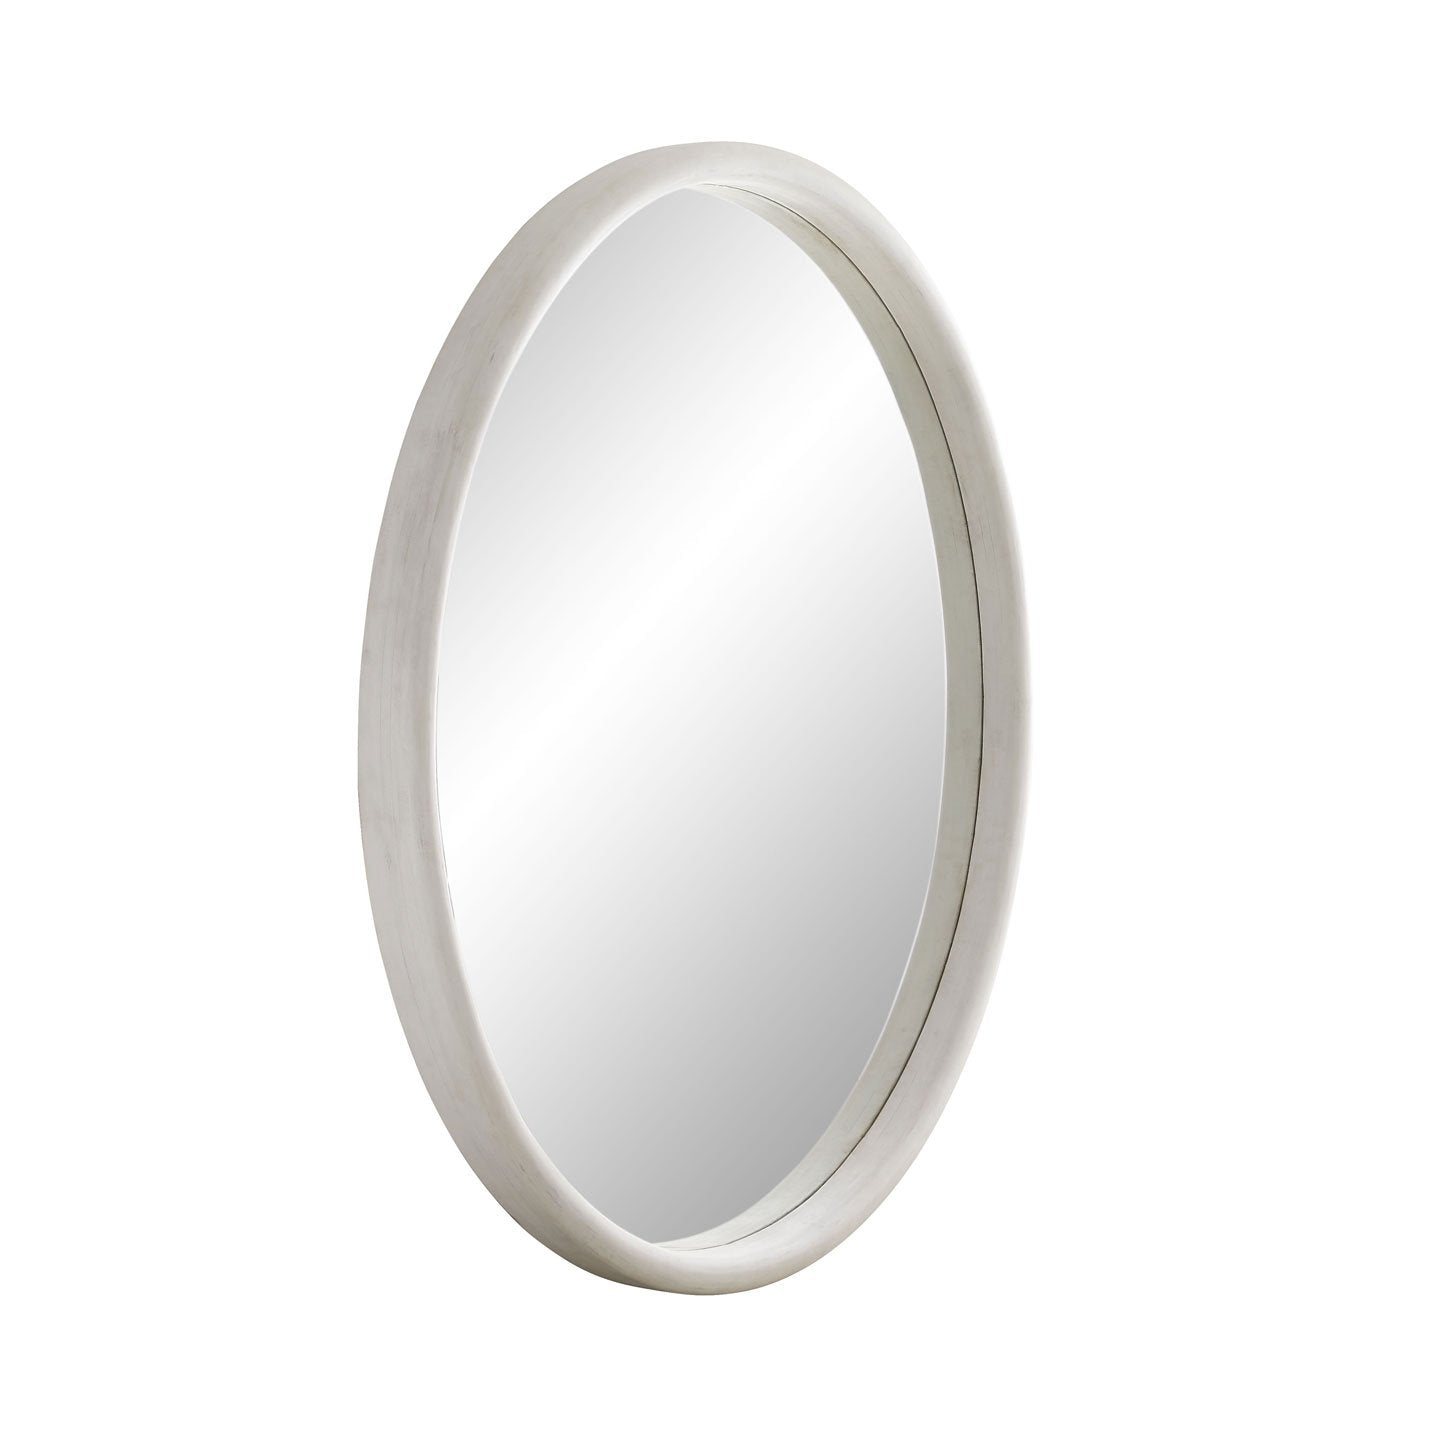 Lesley Large Mirror - White Wash